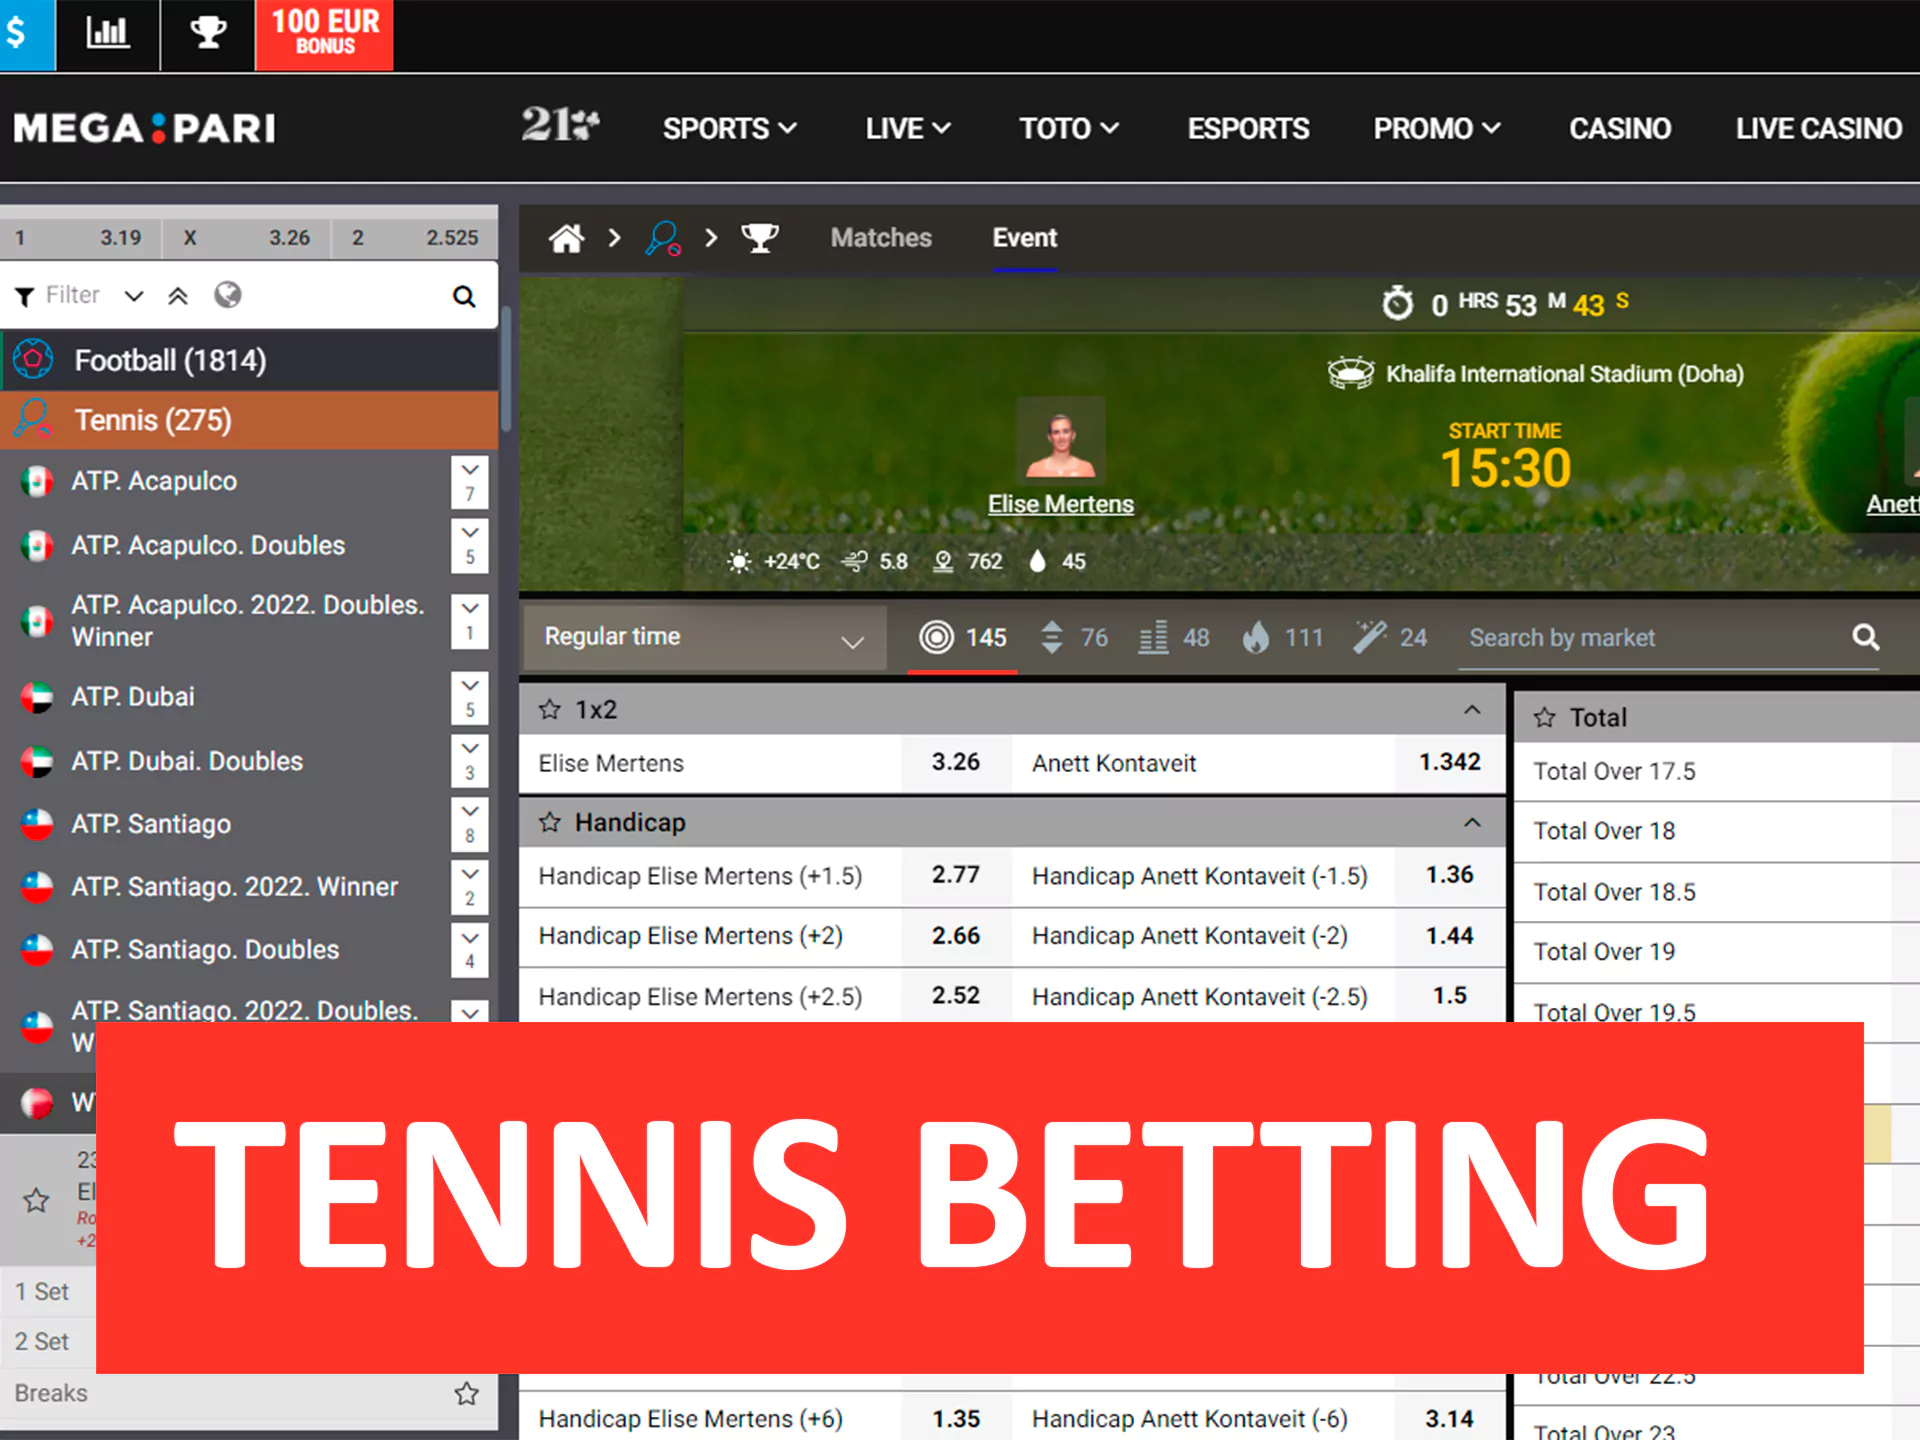 Mega Pari allows betting on tennis events.